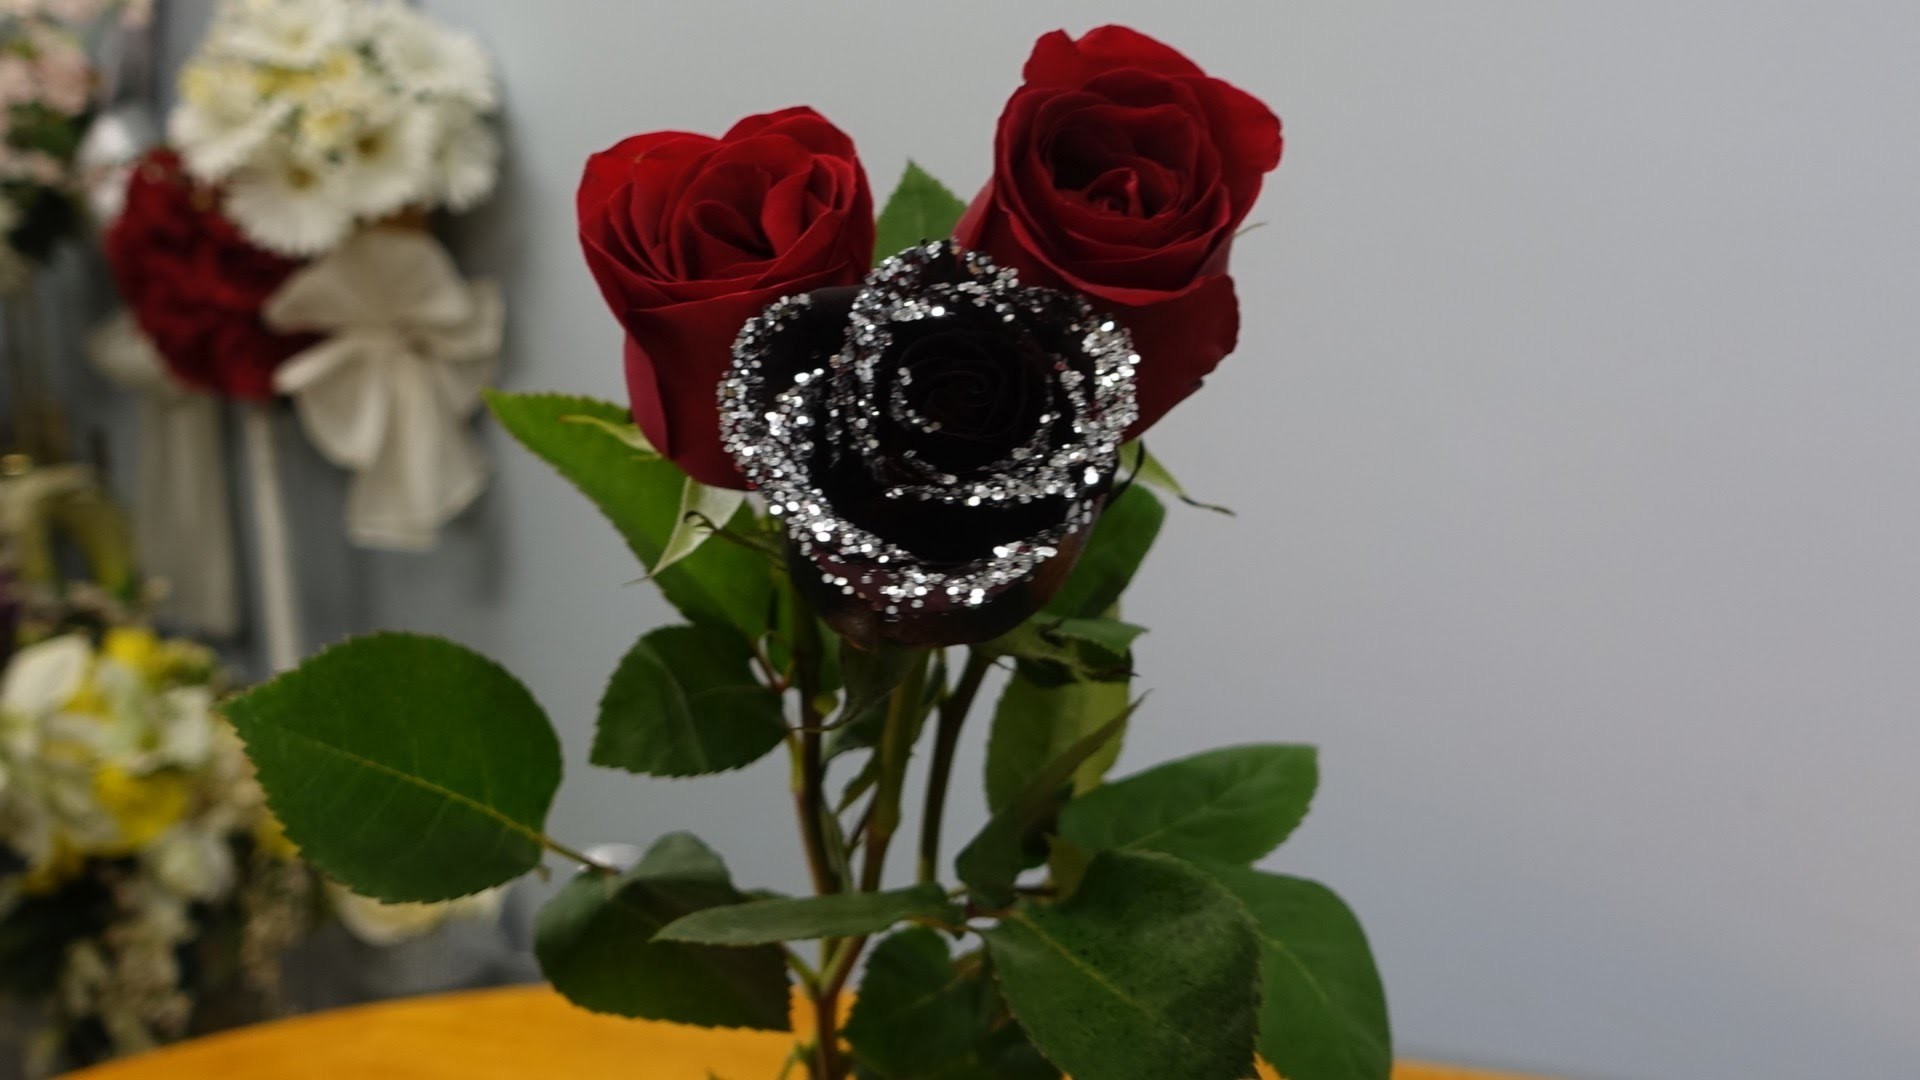 How to make a black rose?